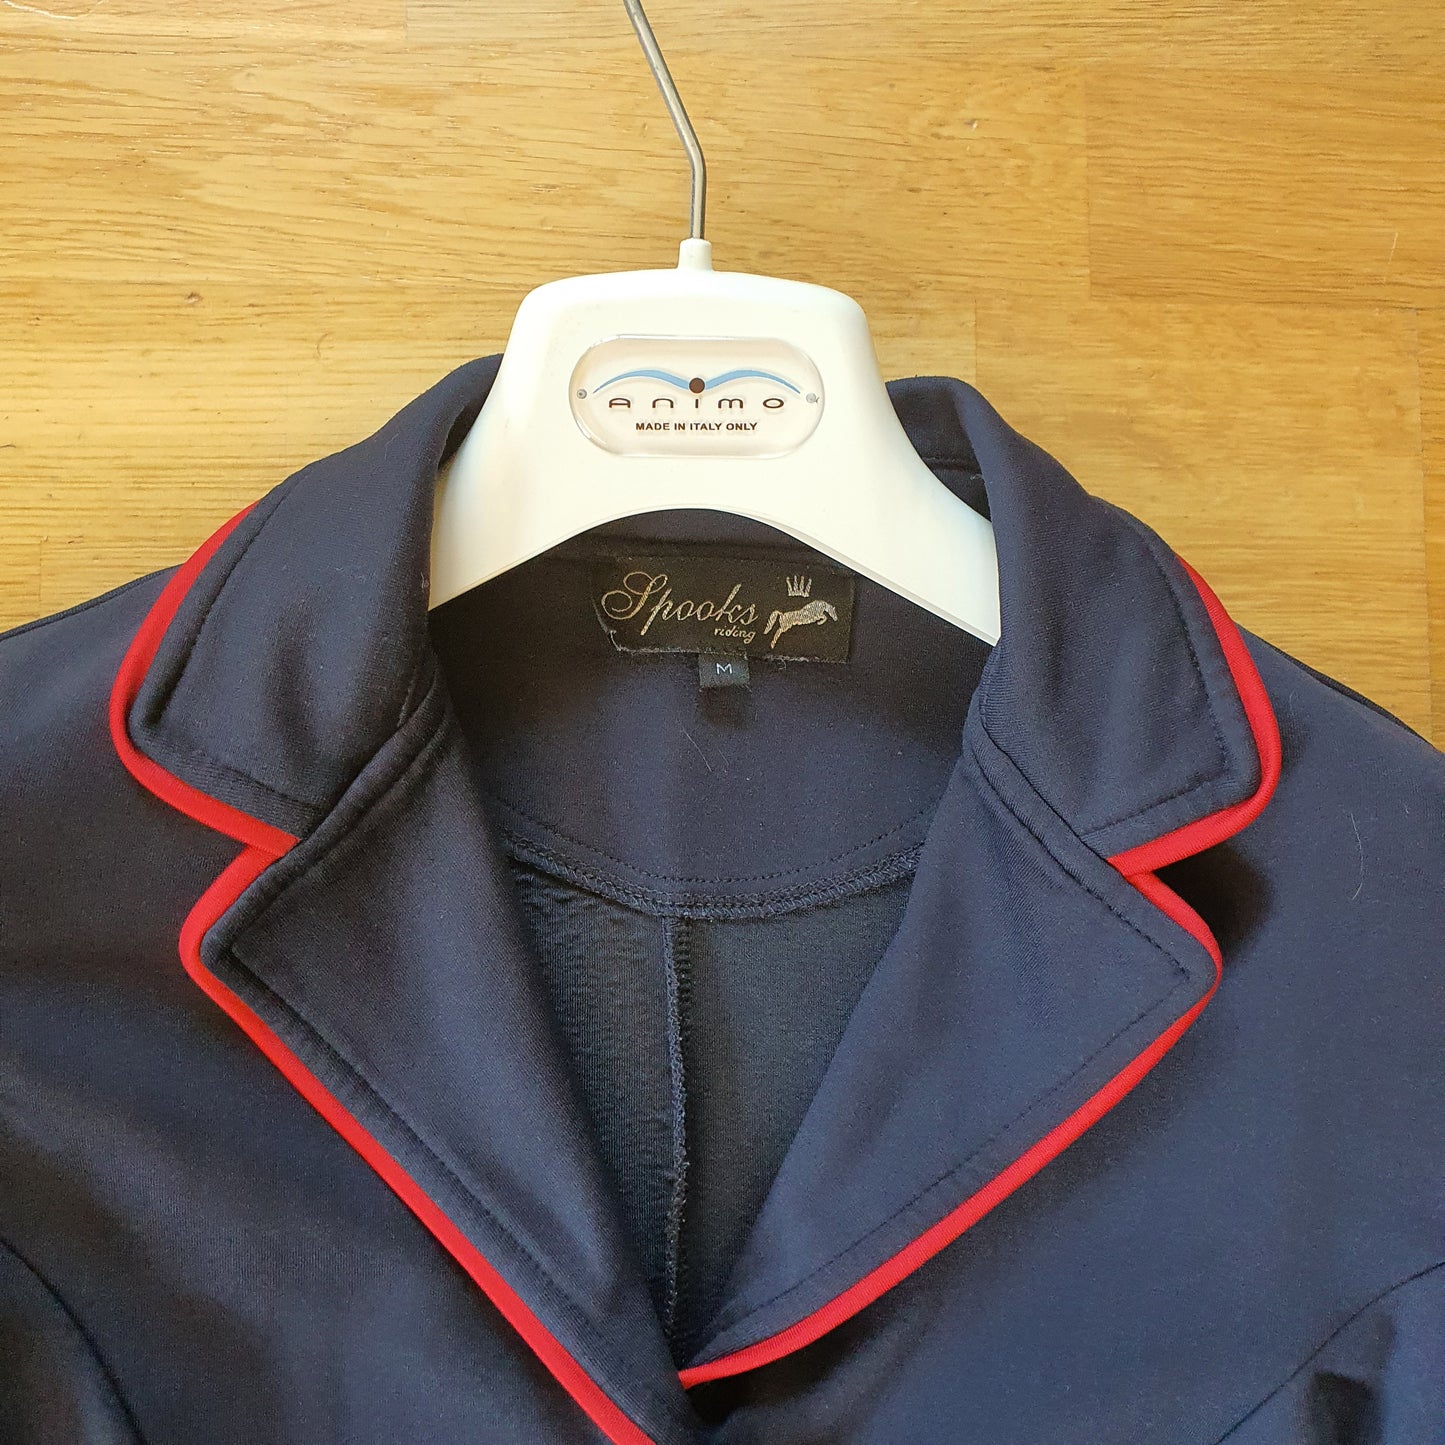 Spooks navy show jacket with red trim ladies size 10 (size M)